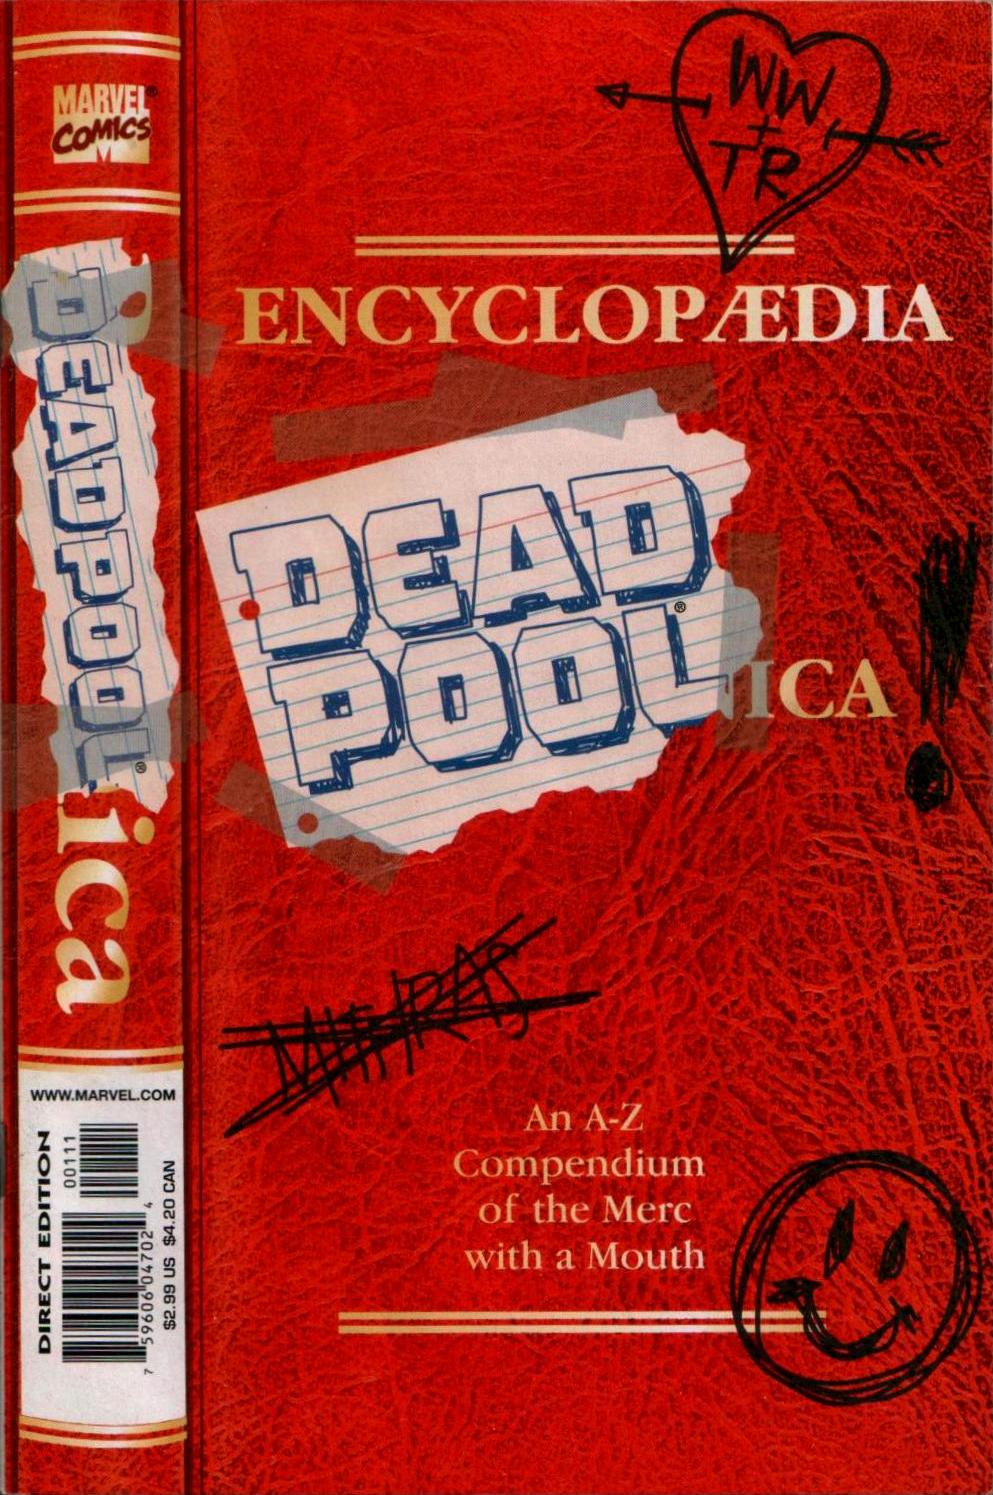 Read online Encyclopædia Deadpoolica comic -  Issue # Full - 1